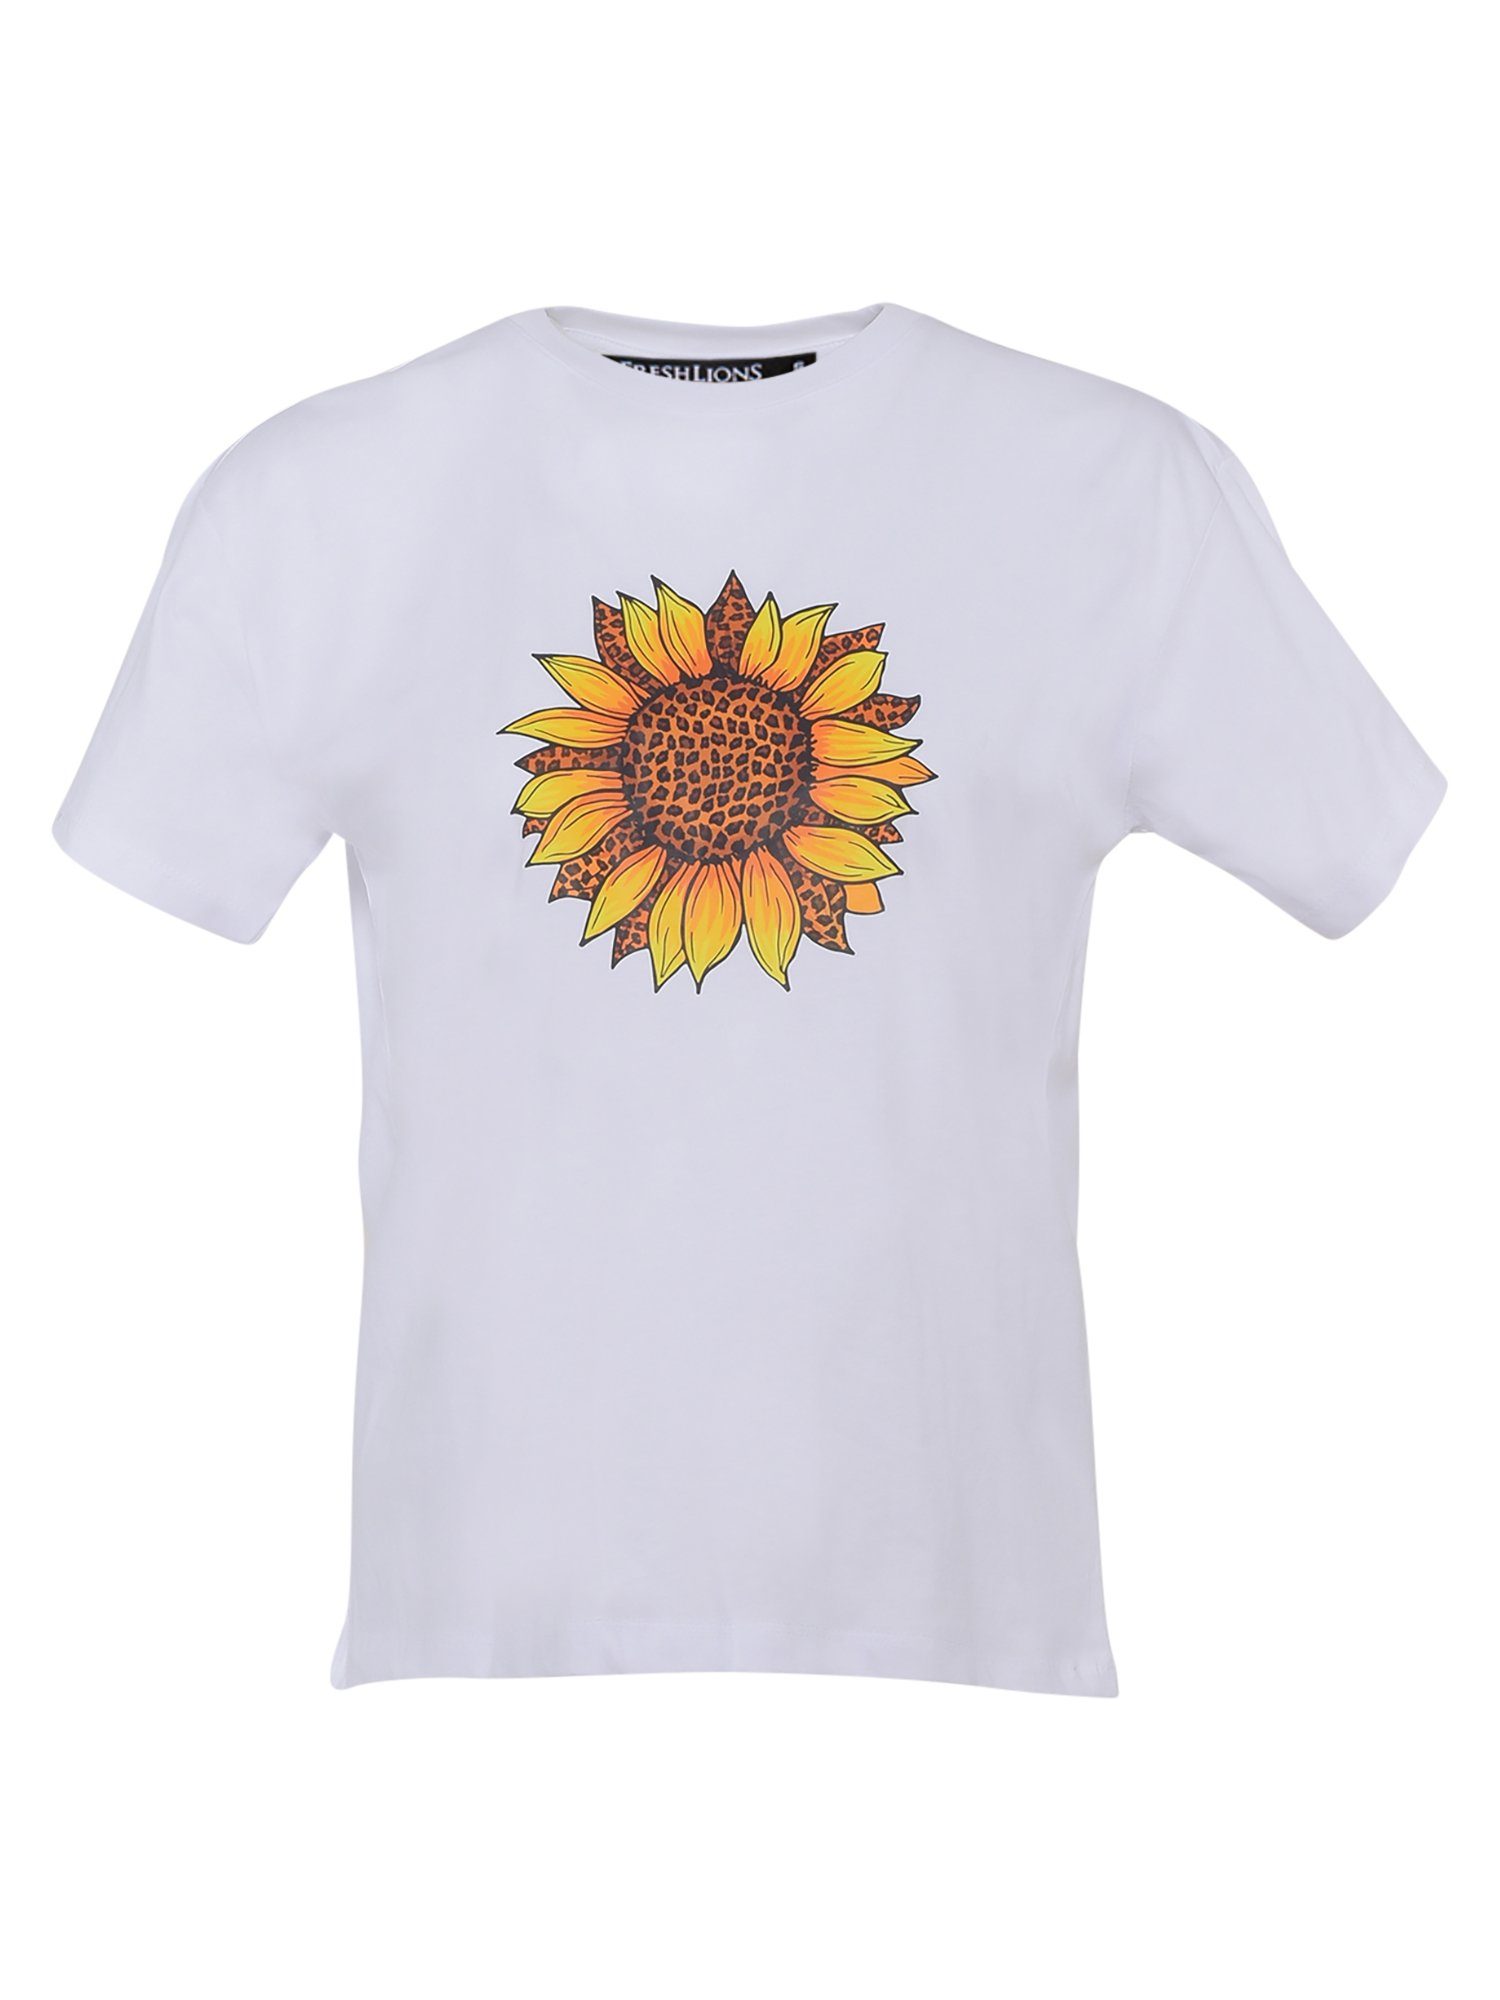 Freshlions T-Shirt Freshlions Sonnenblume T-Shirt